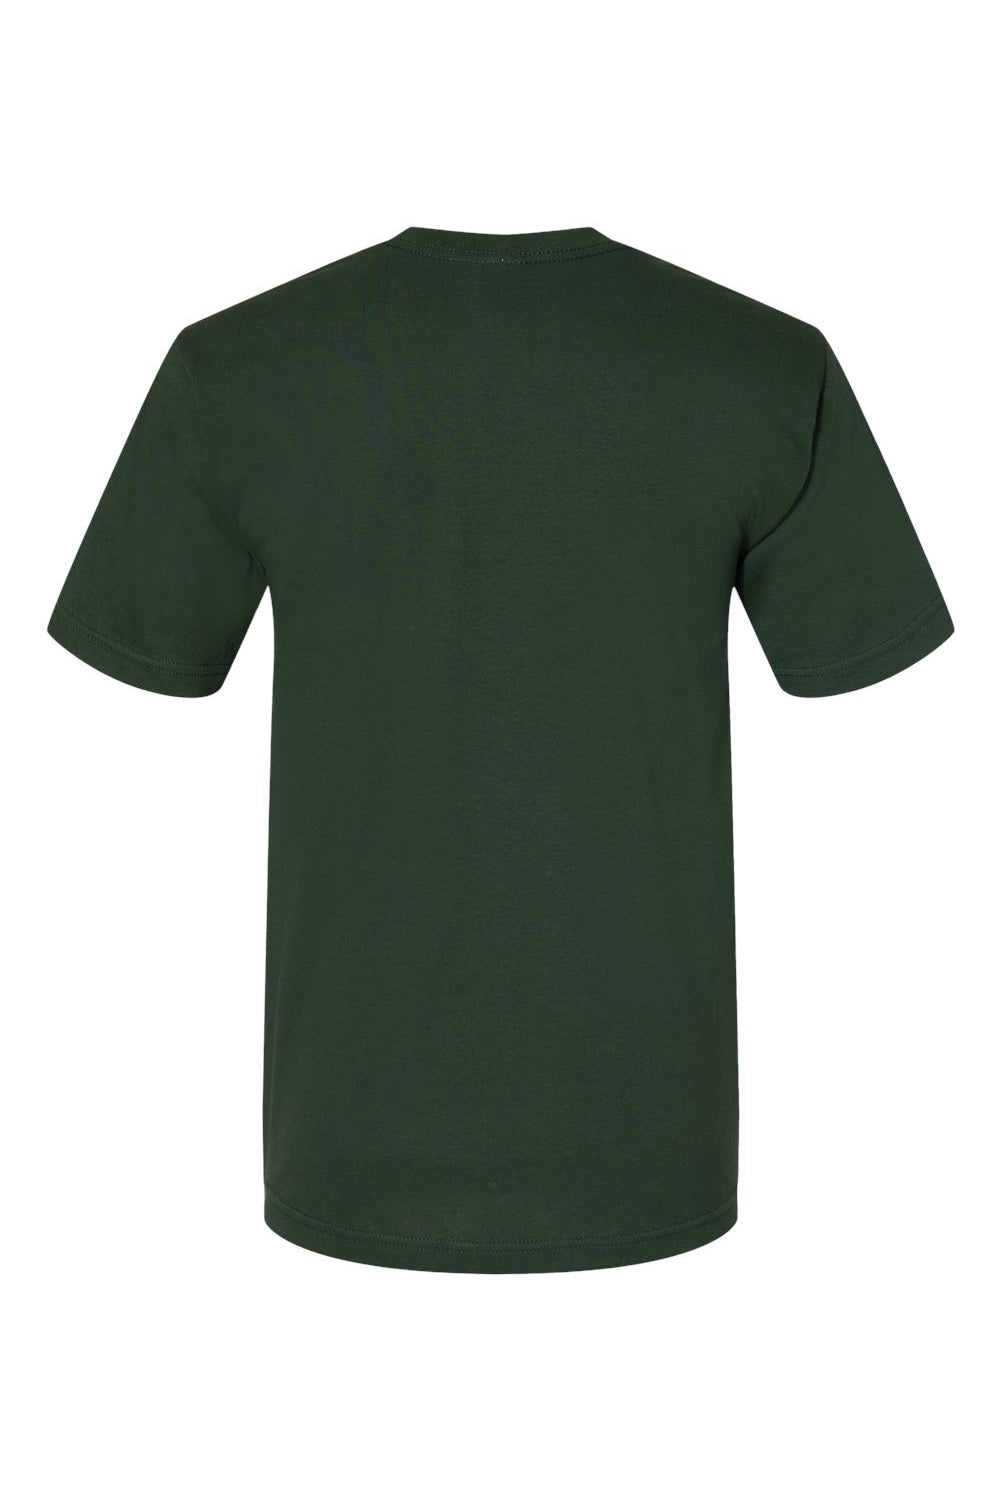 Bayside BA5040 Mens USA Made Short Sleeve Crewneck T-Shirt Hunter Green Flat Back